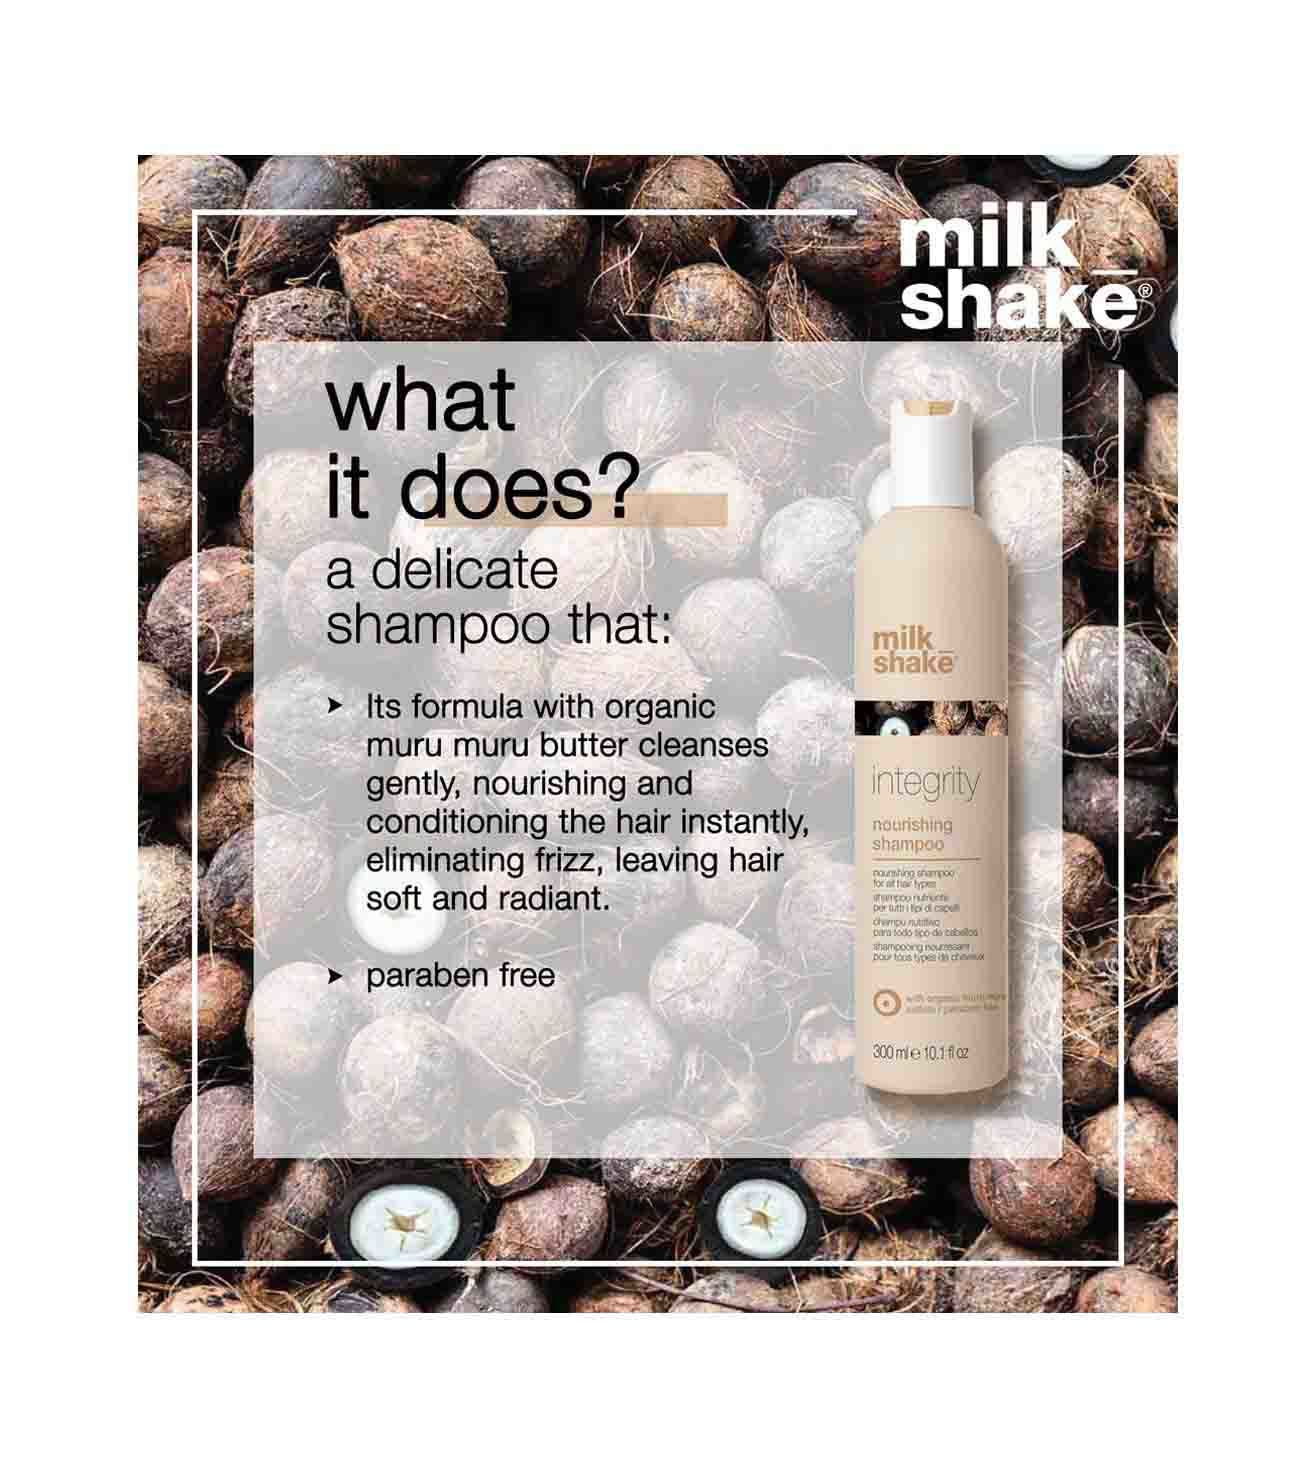 Milk Shake Integrity Nourishing Shampoo